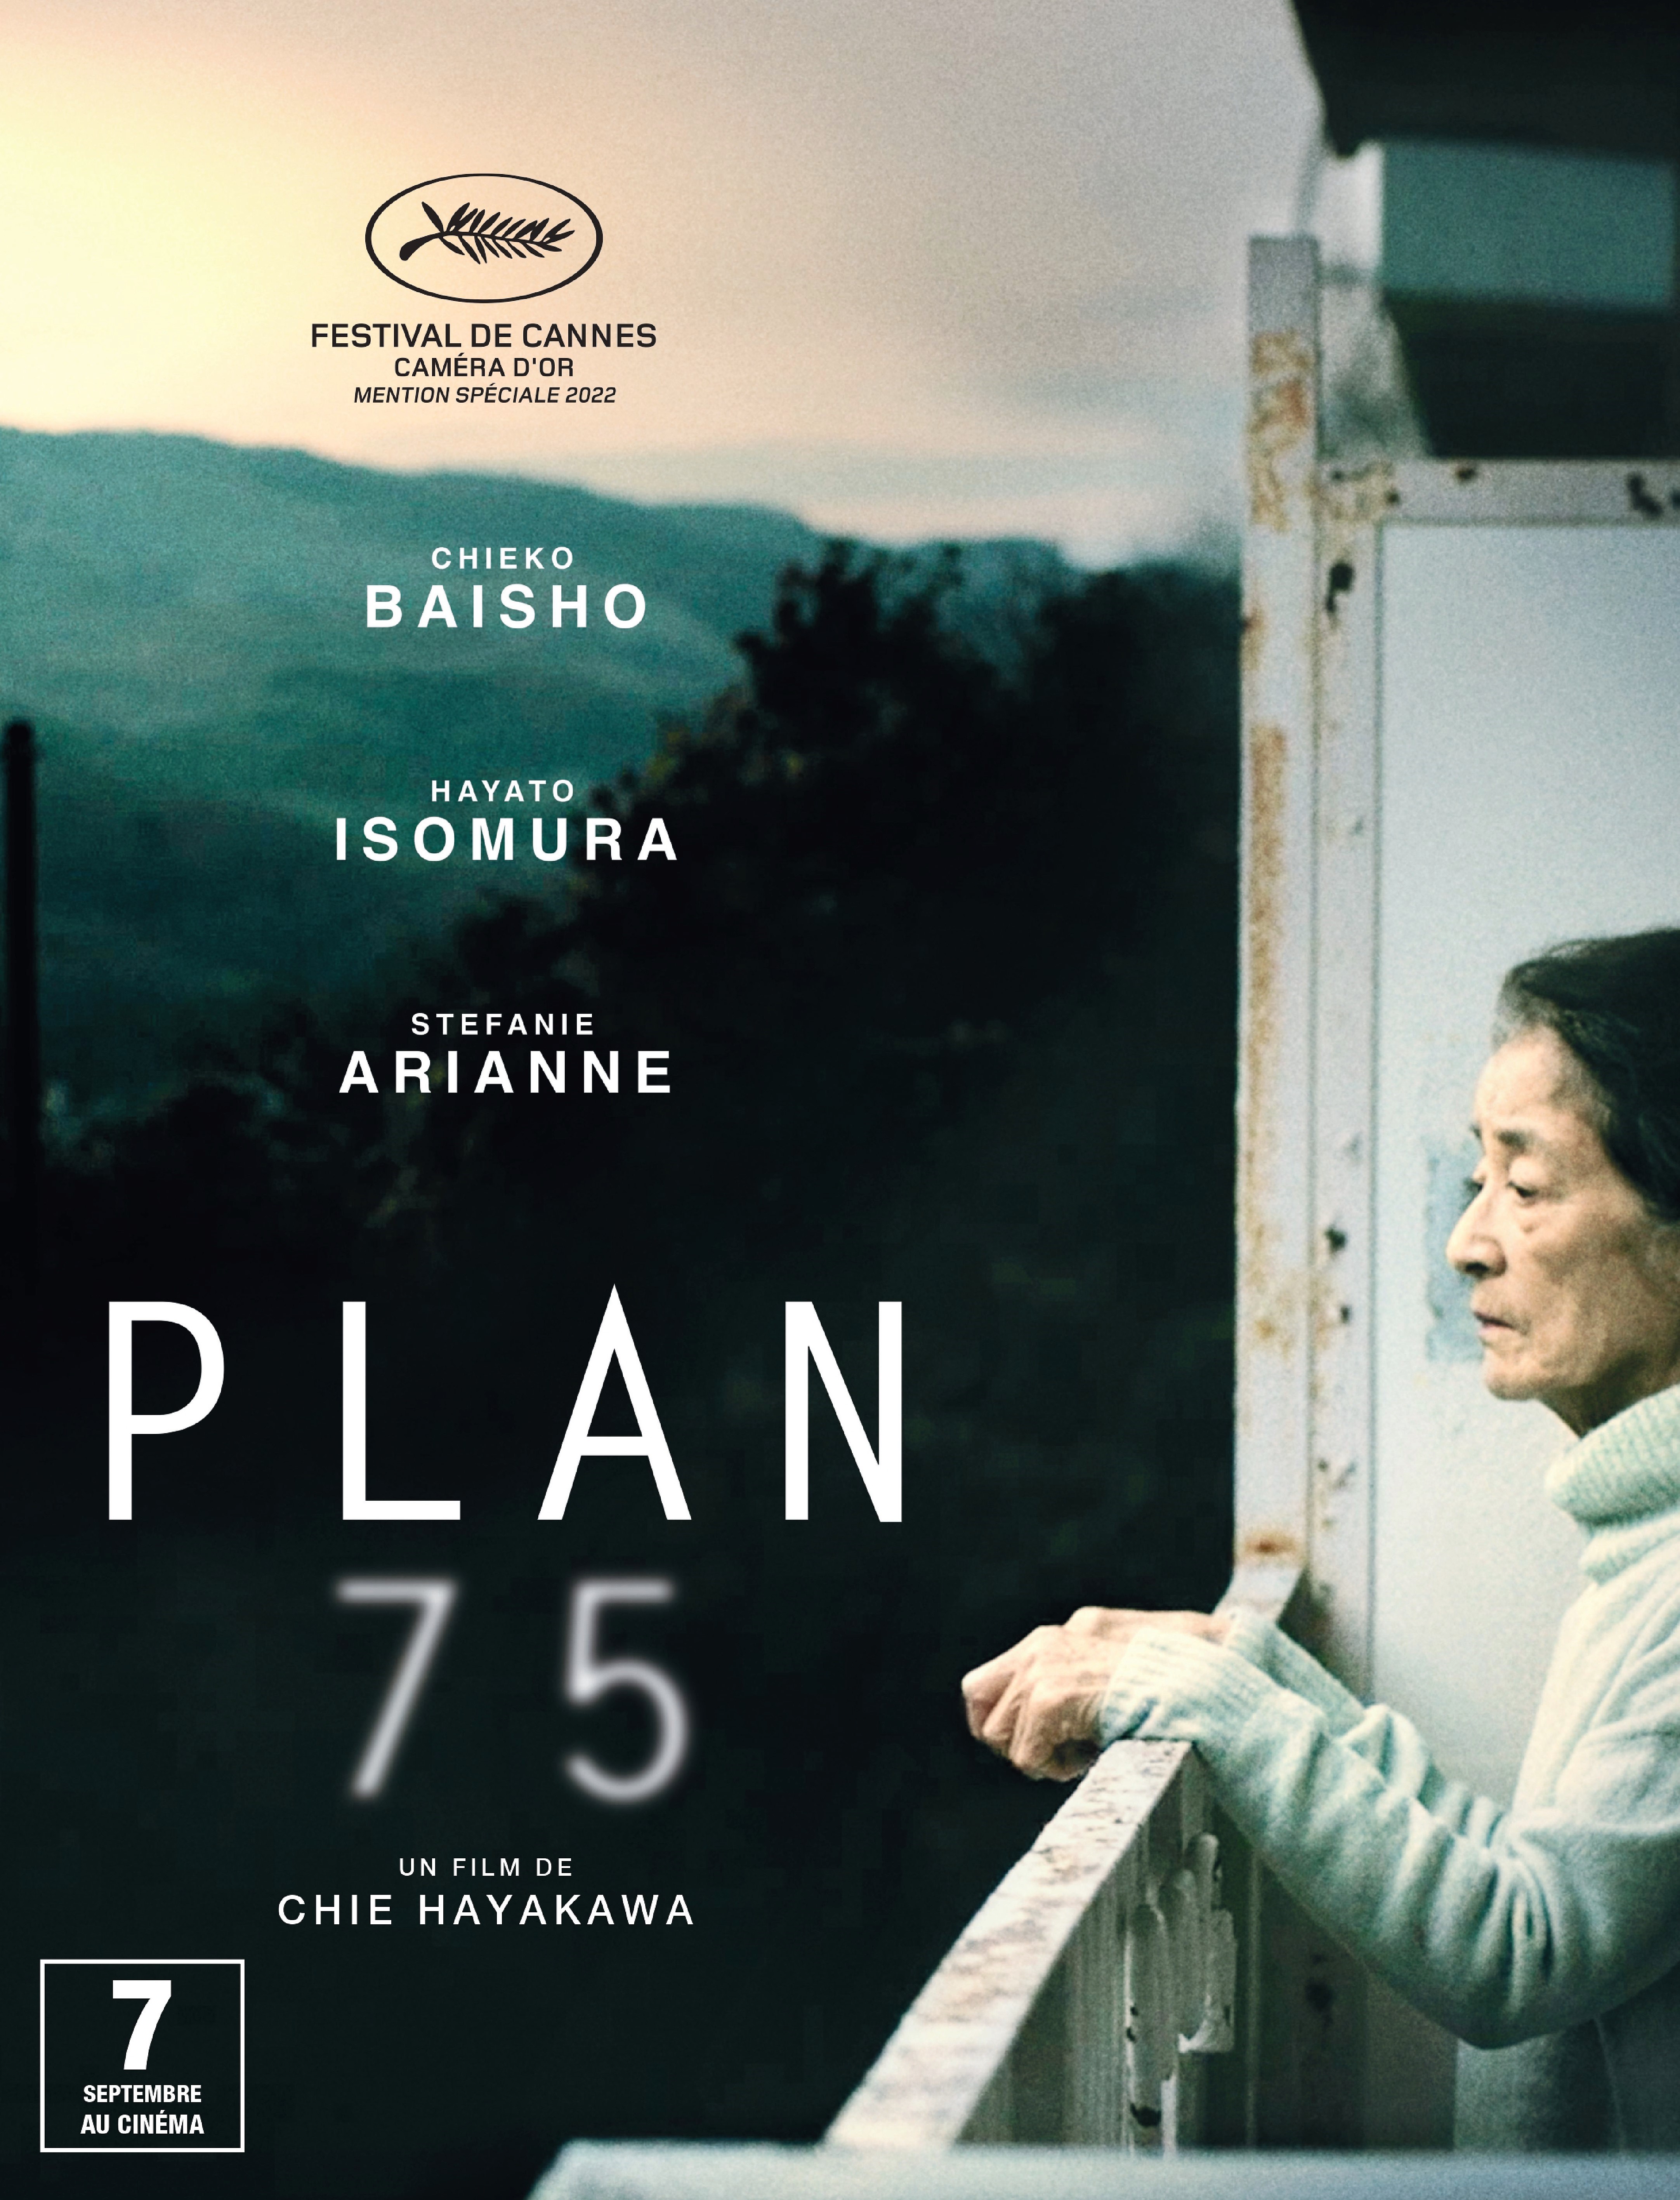 Prix du Jury des Jeunes 2023: "Plan 75", de Chie Hayakawa